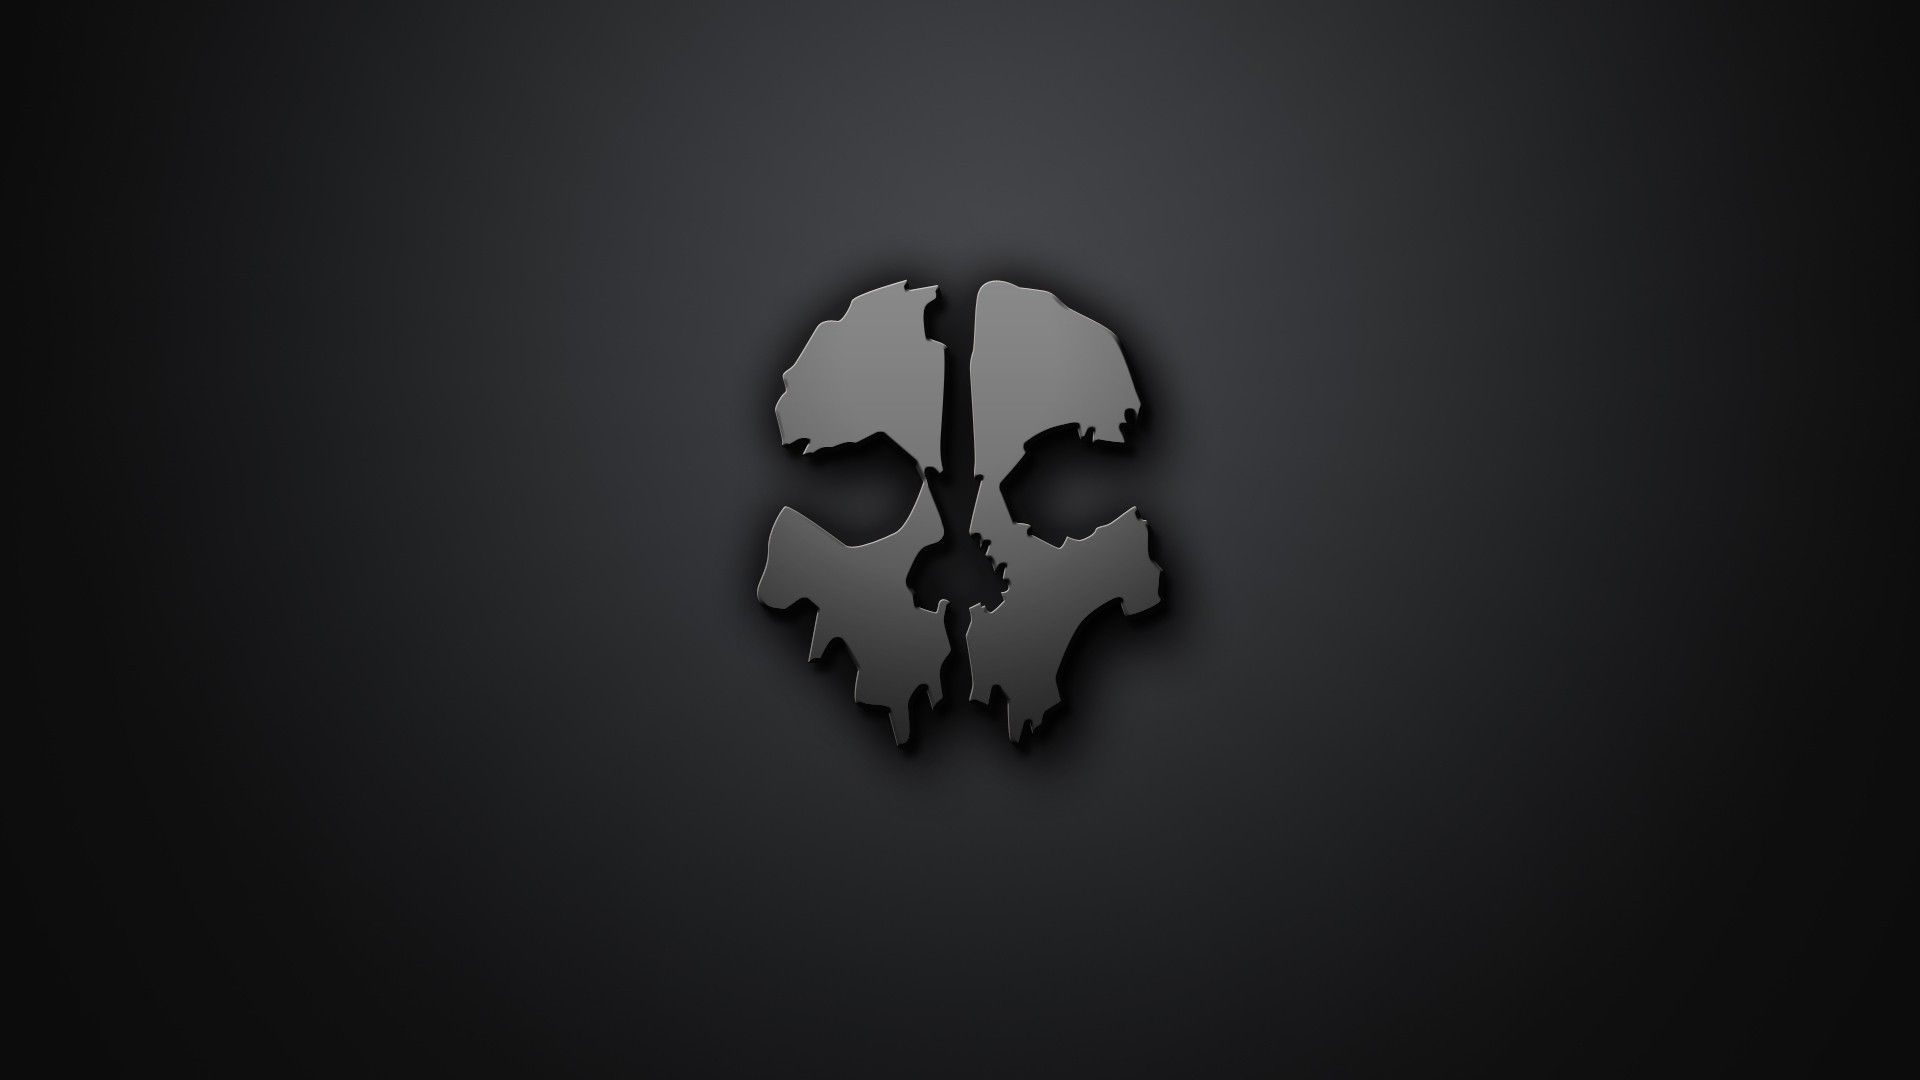 Call Of Duty Logo Wallpaper